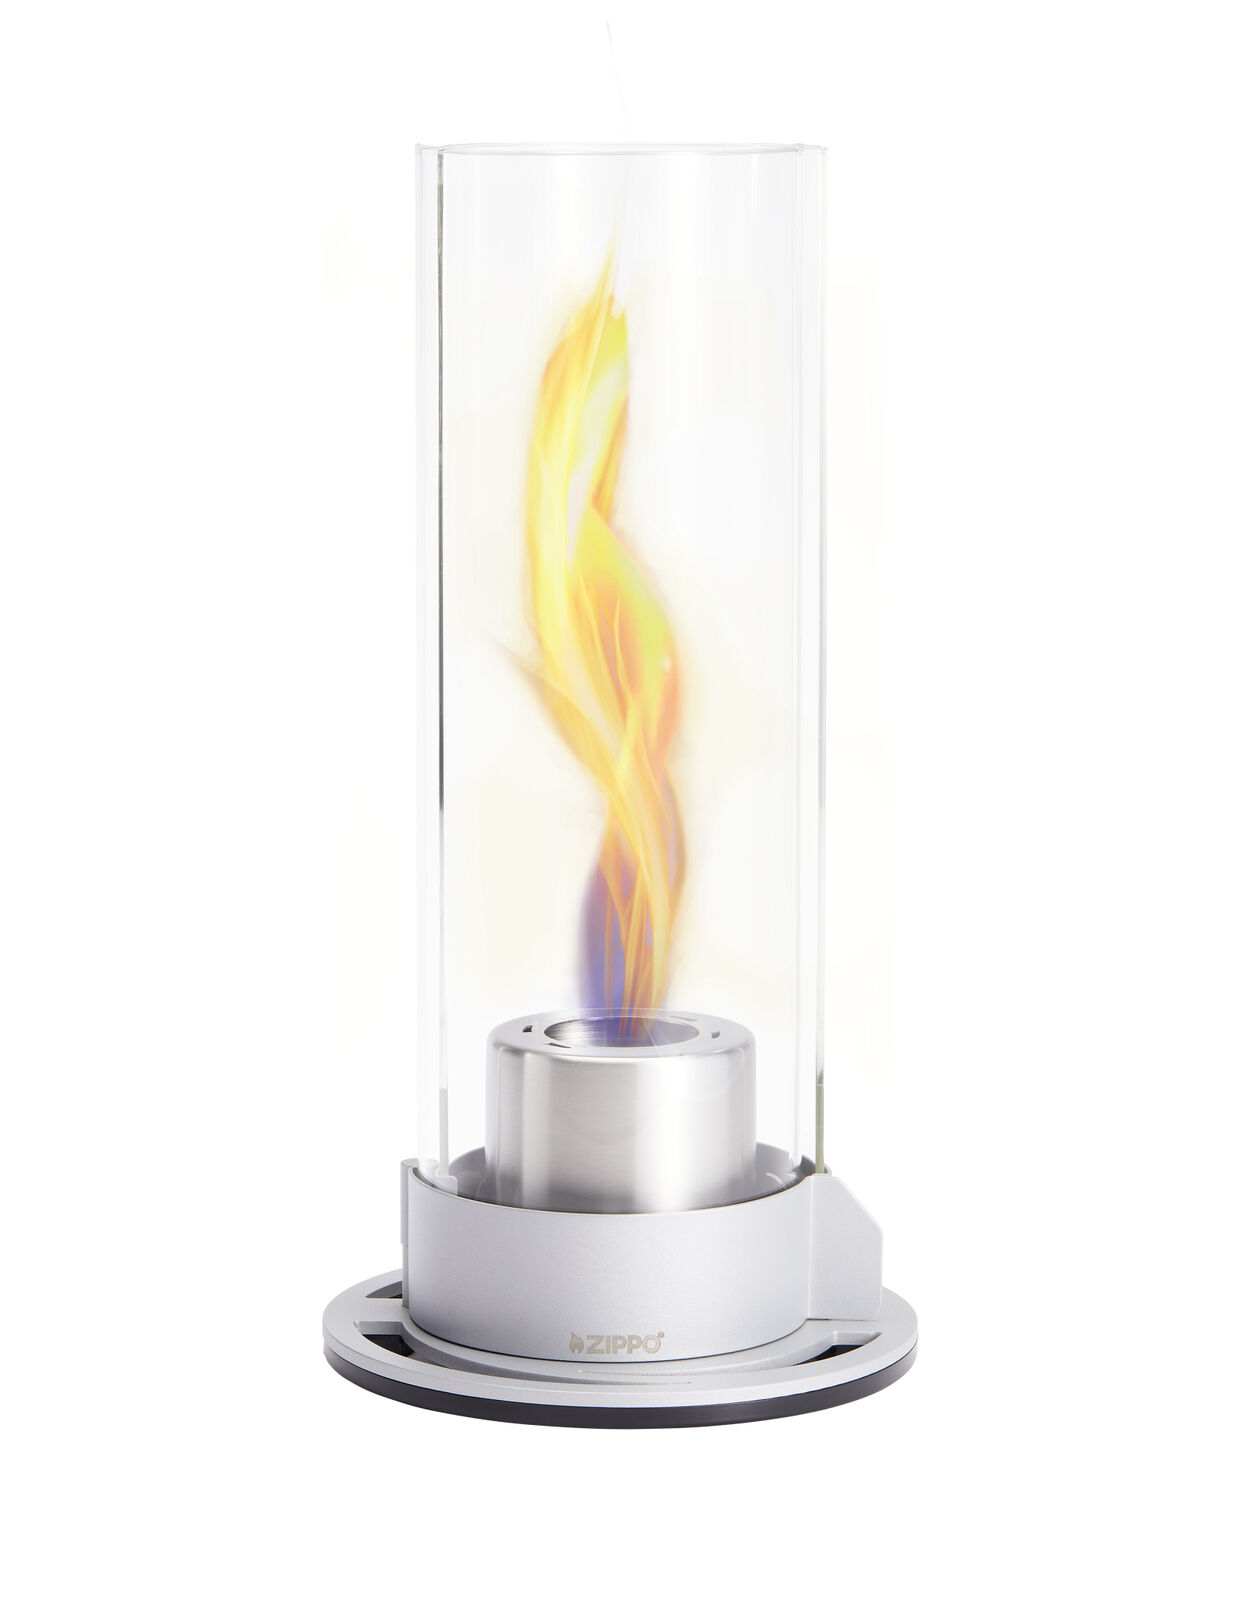 Zippo FlameScapes™ Spiral Fire Feature XL, 60044